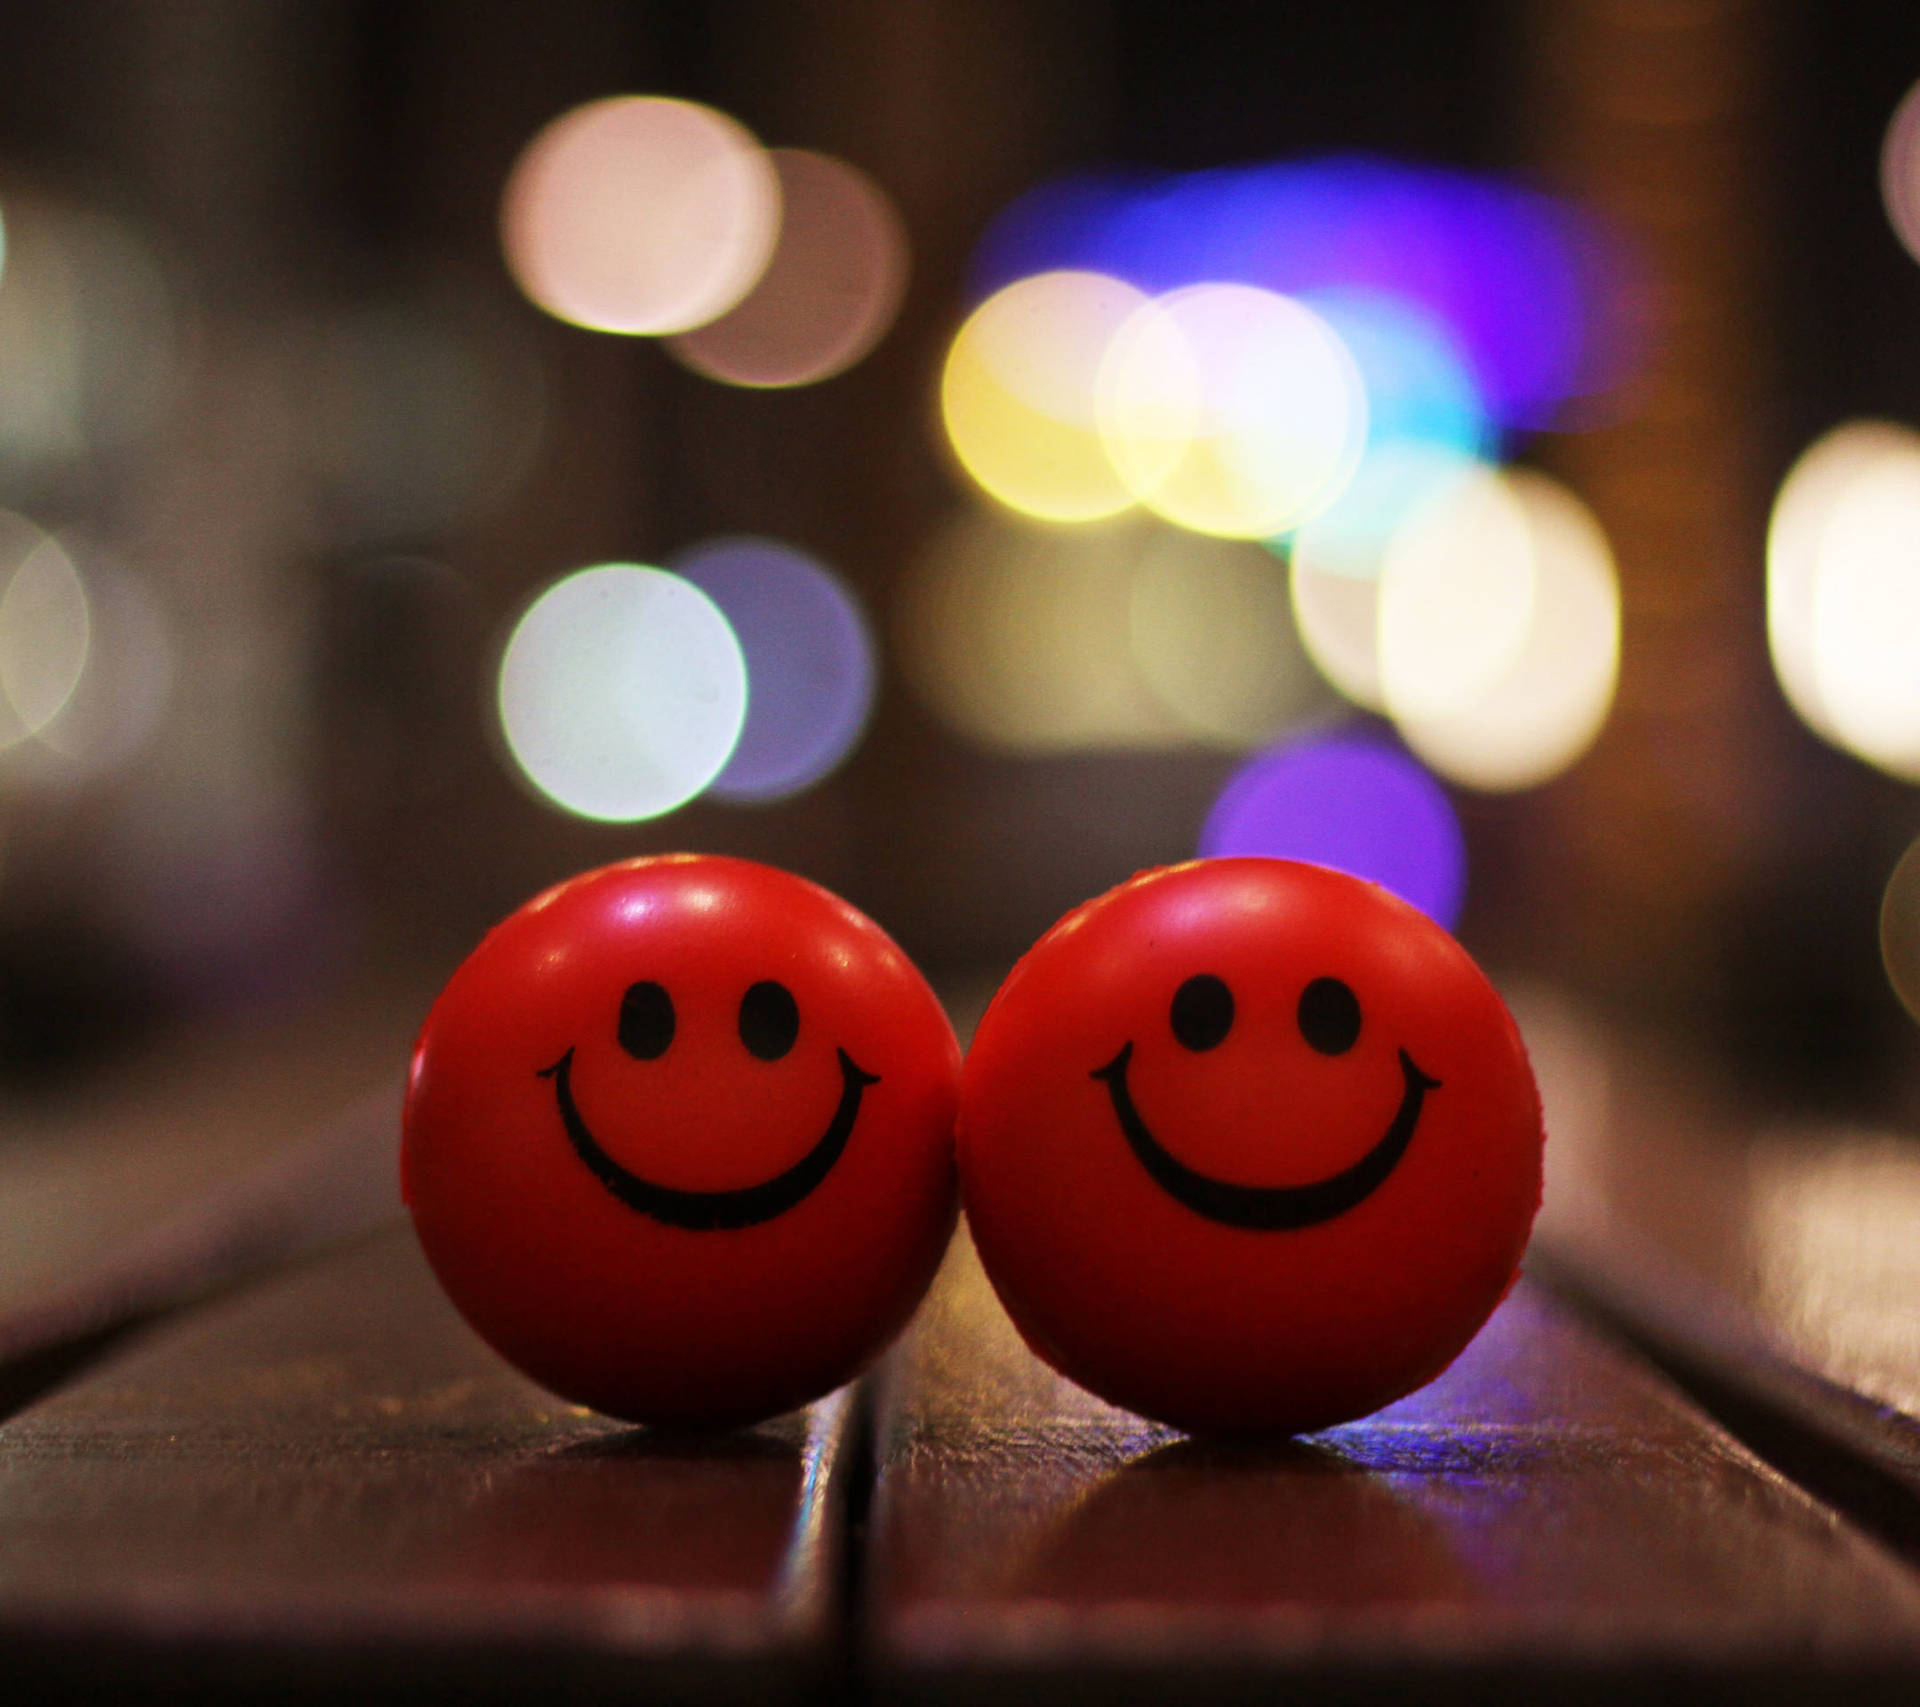 Red Stress Balls Smile Background